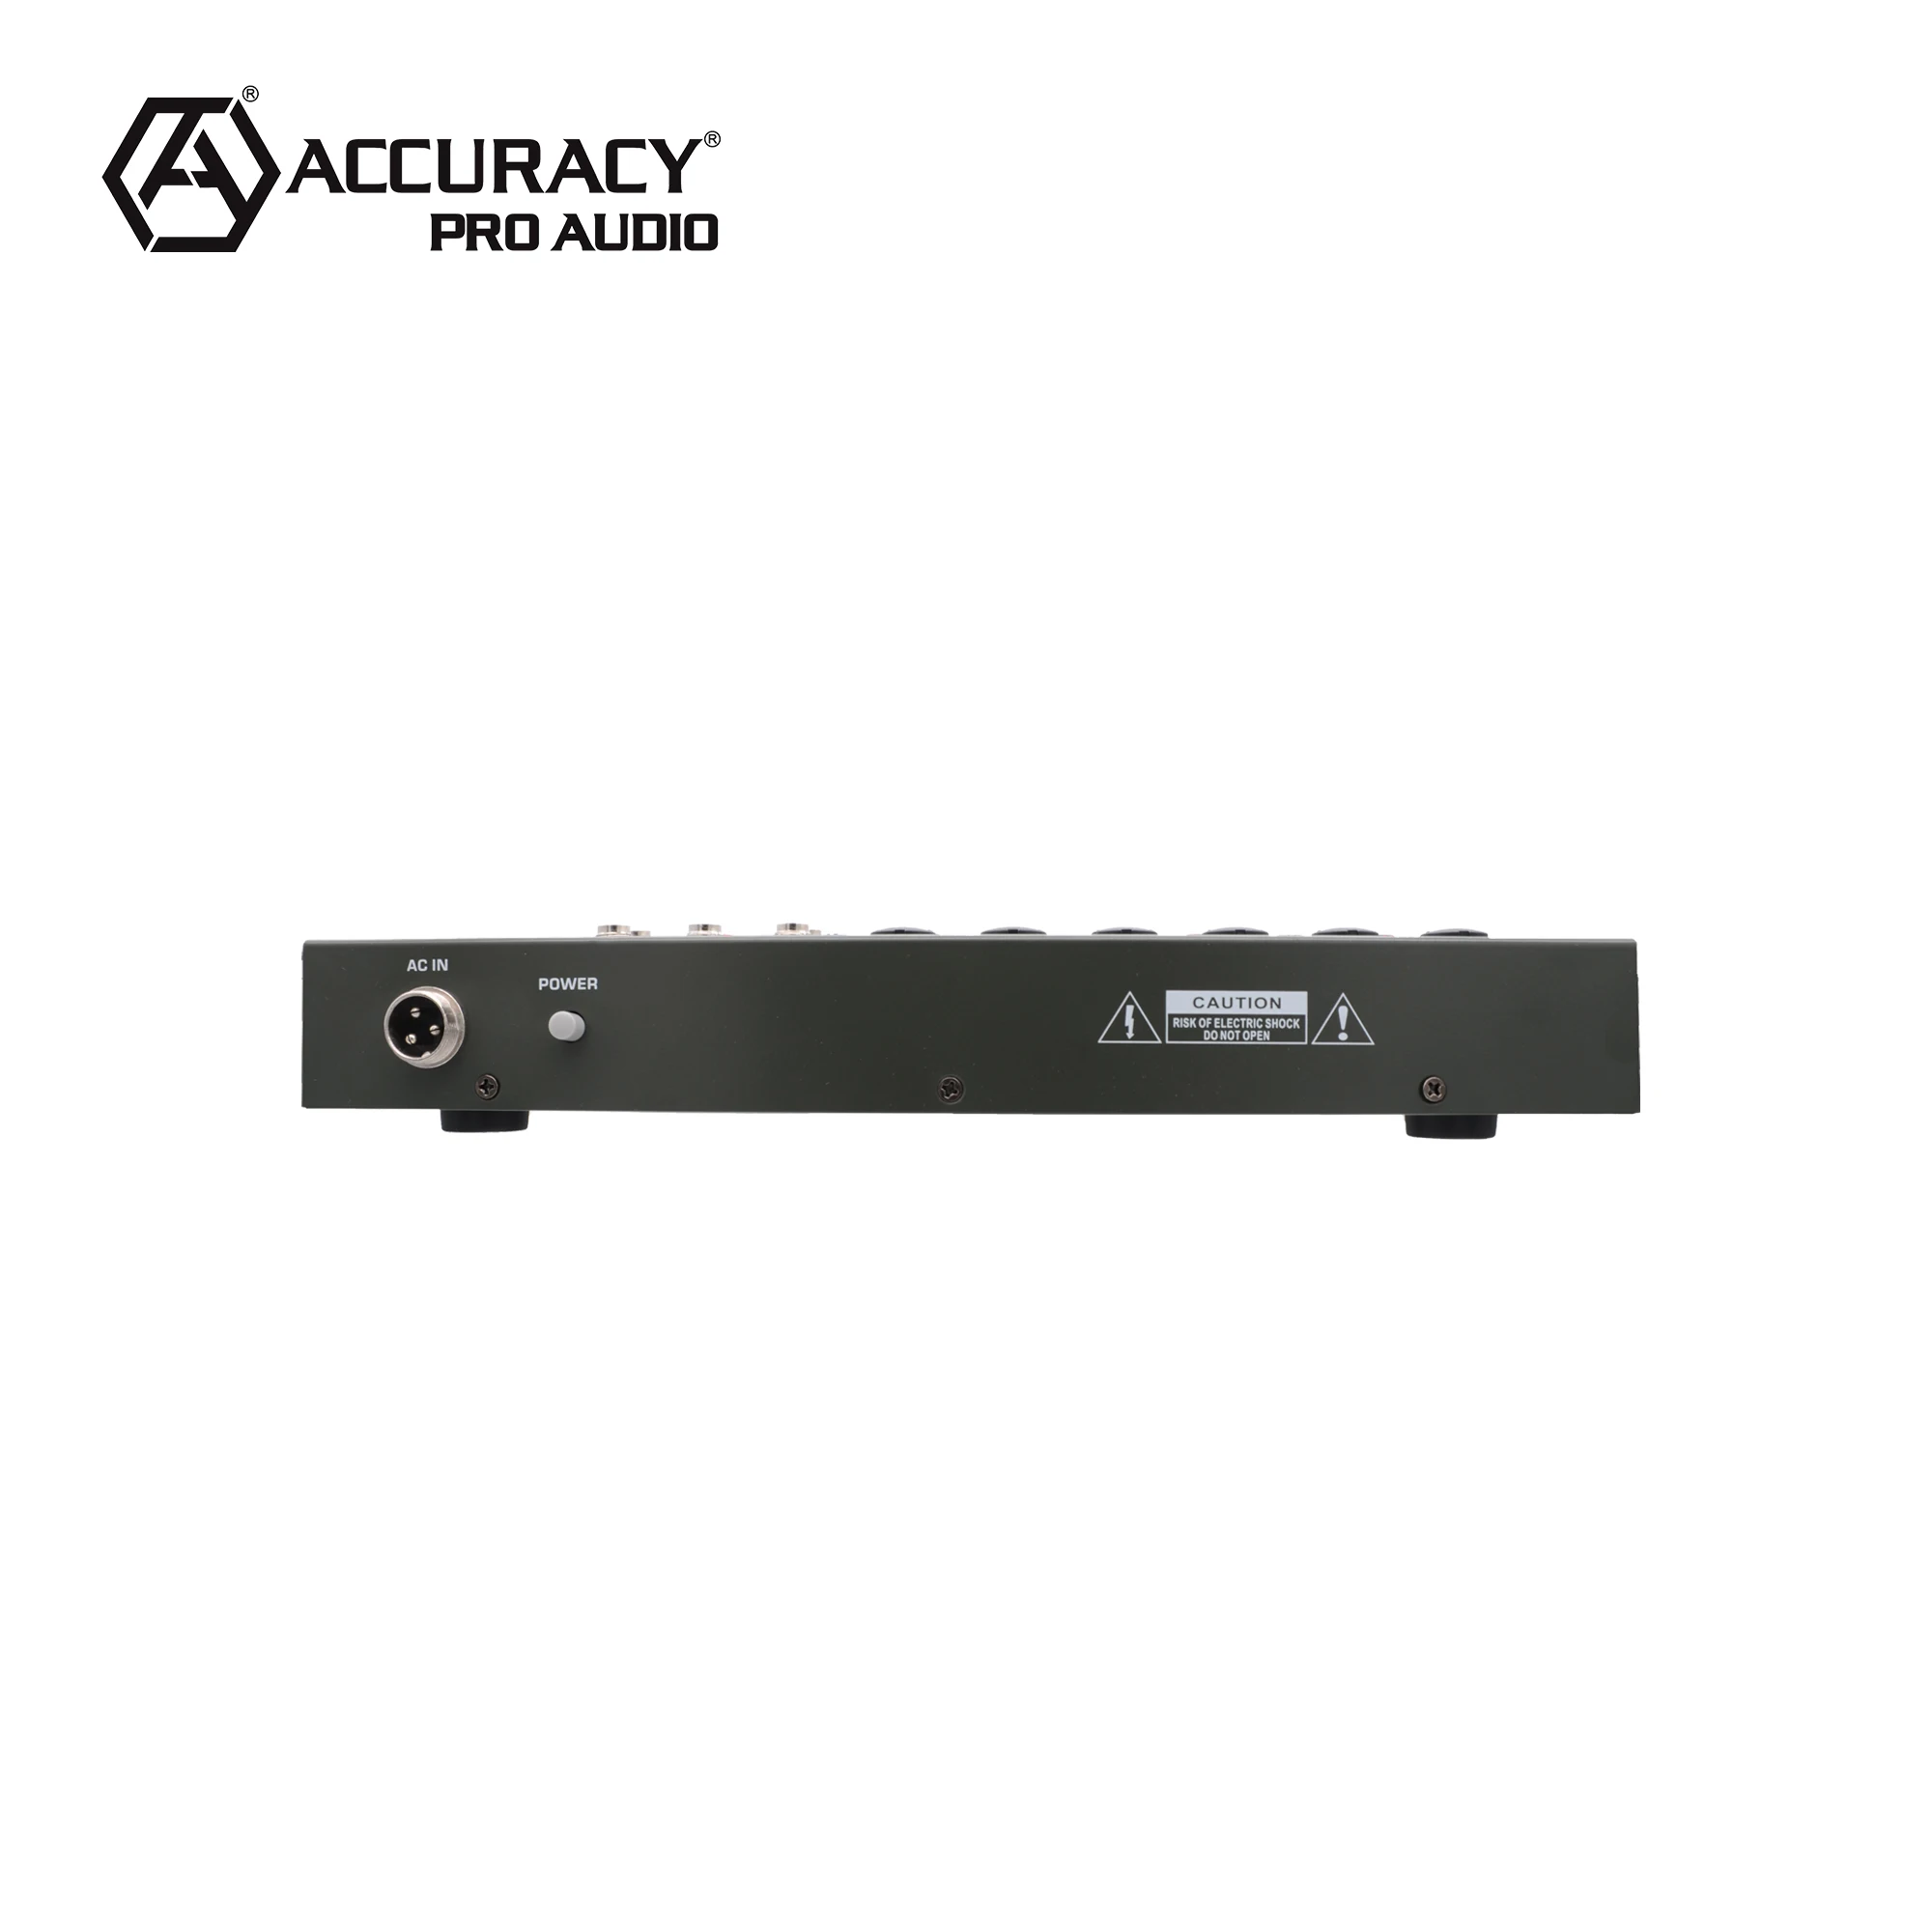 Accuracy Pro Audio ProfessionalMixer MU8   dj controller/audio console mixer